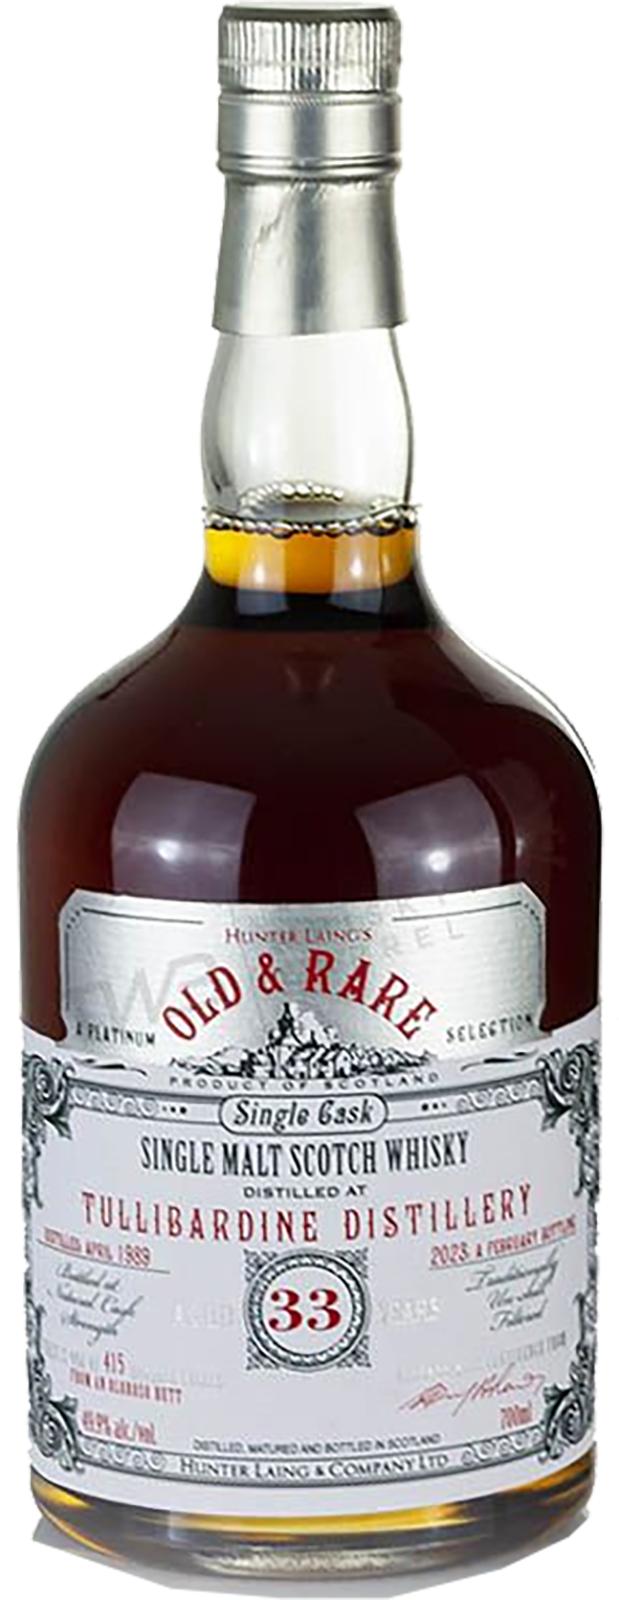 Tullibardine Old & Rare Single Sherry Cask 1989 33 Year Old Whisky | 700ML